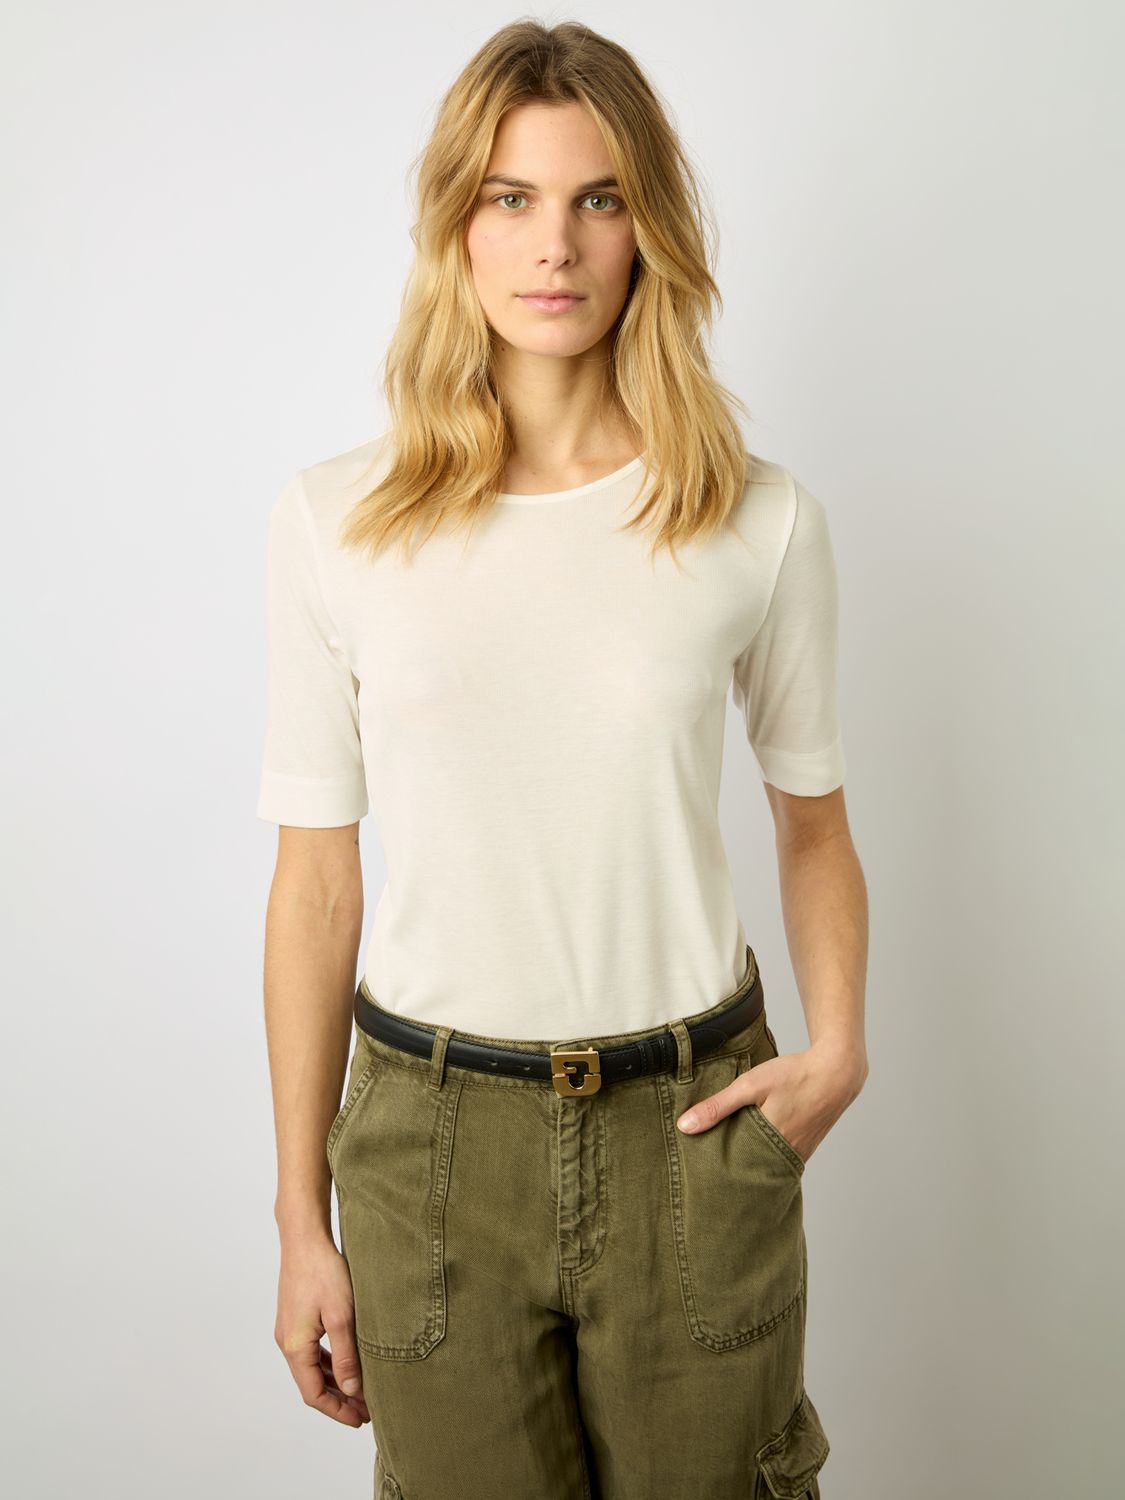 Buy Gerard Darel Celya Linen Blend Cargo Jeans, Khaki Green Online at johnlewis.com